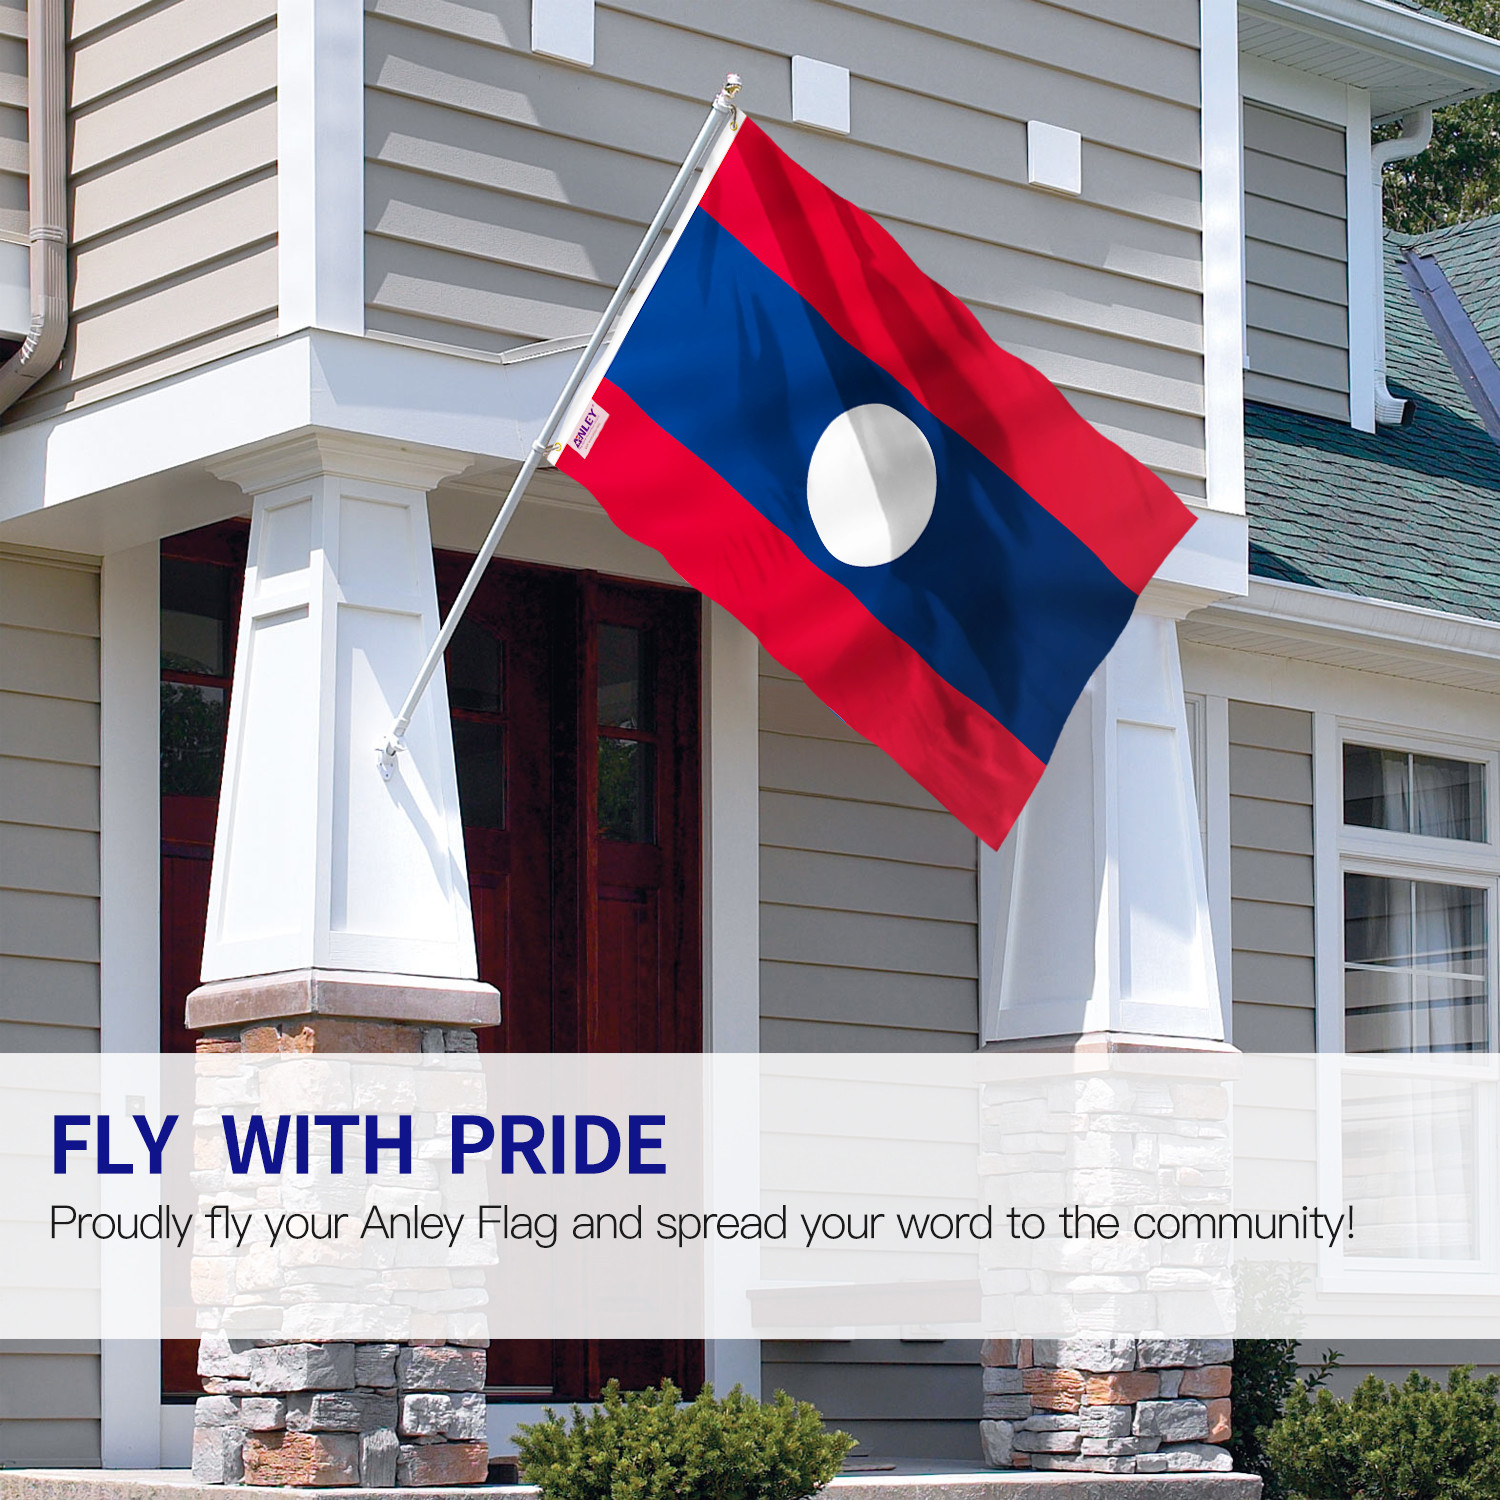 Banner 3x5 ft Former Laotian Flags 90 x 150 cm AZ FLAG Laos Old Flag 3' x 5'